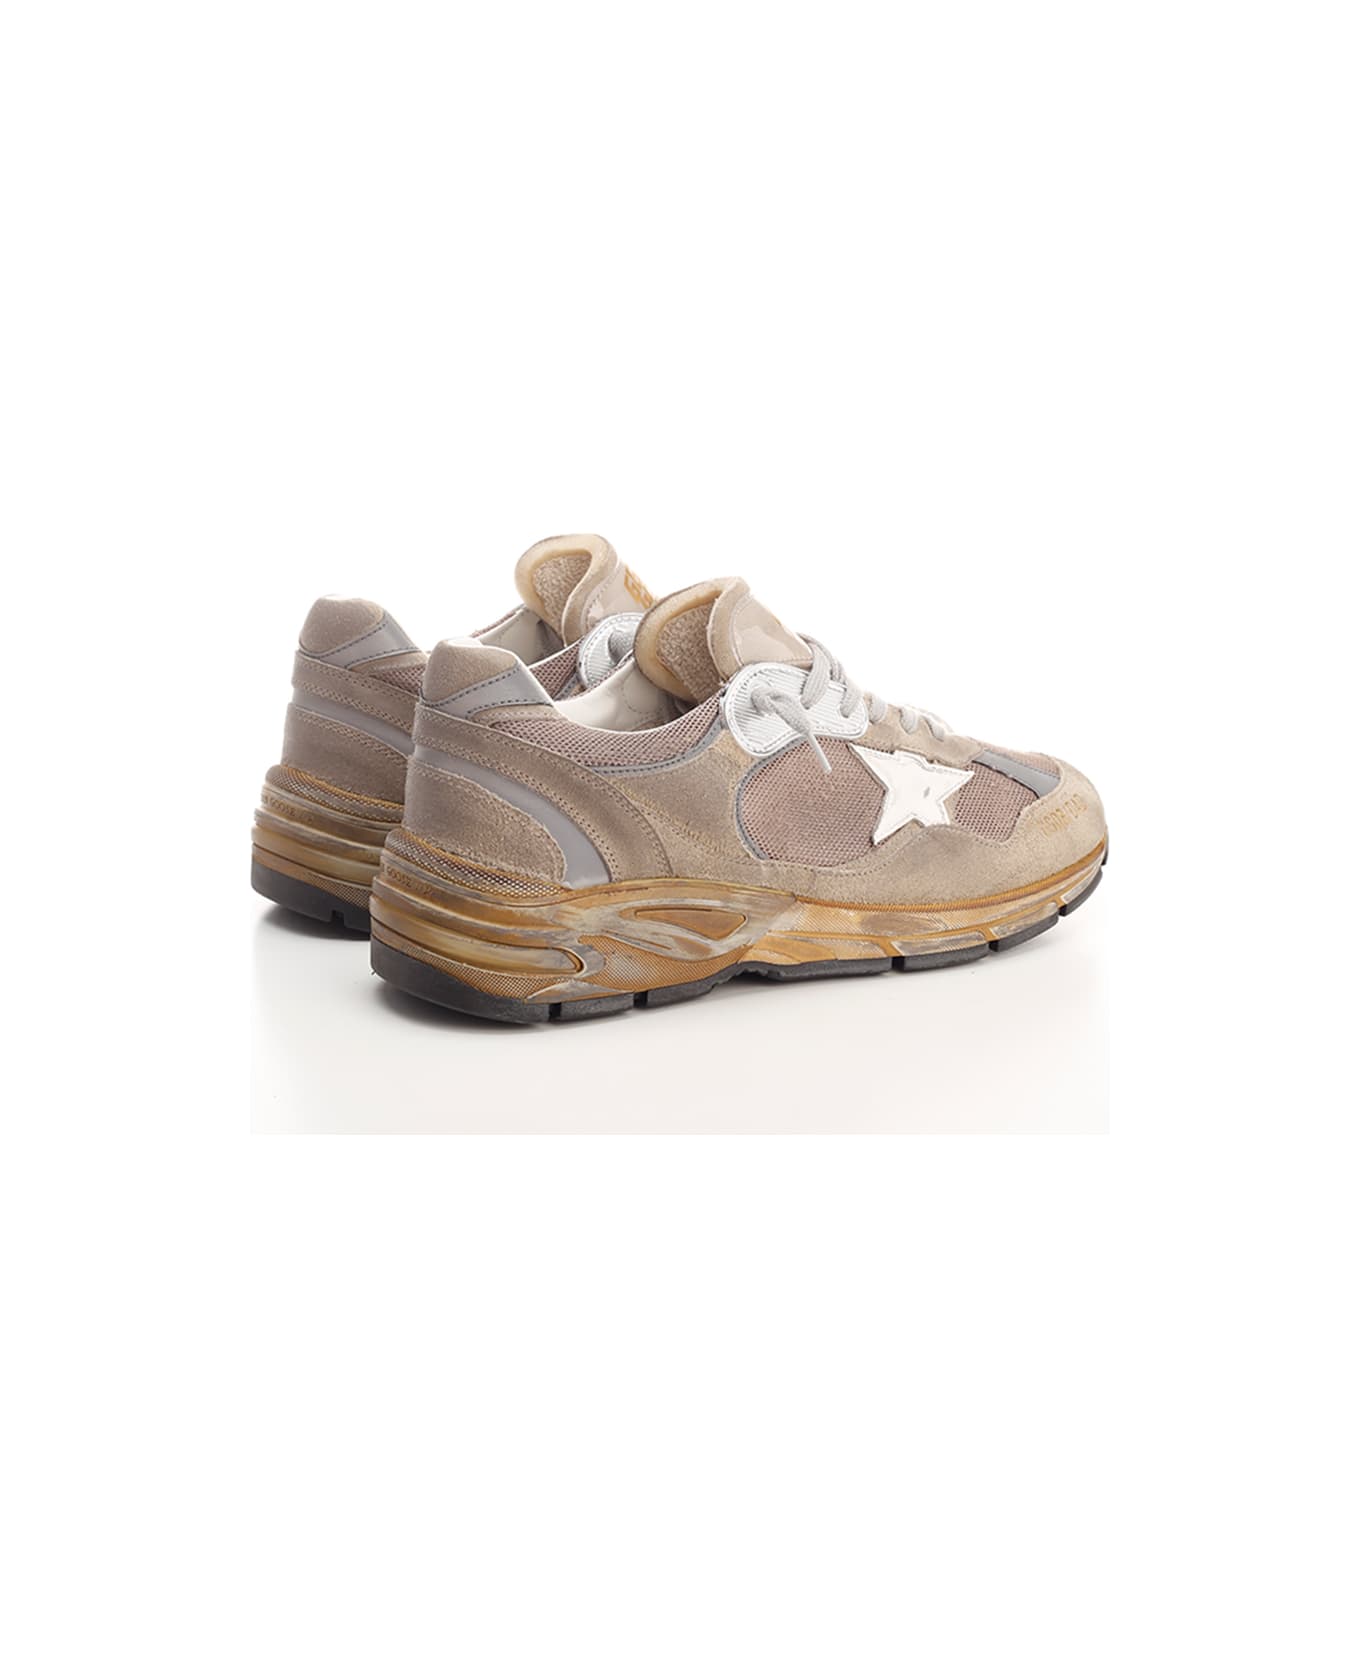 Golden Goose Running Dad Sneaker - Taupe/silver/white スニーカー